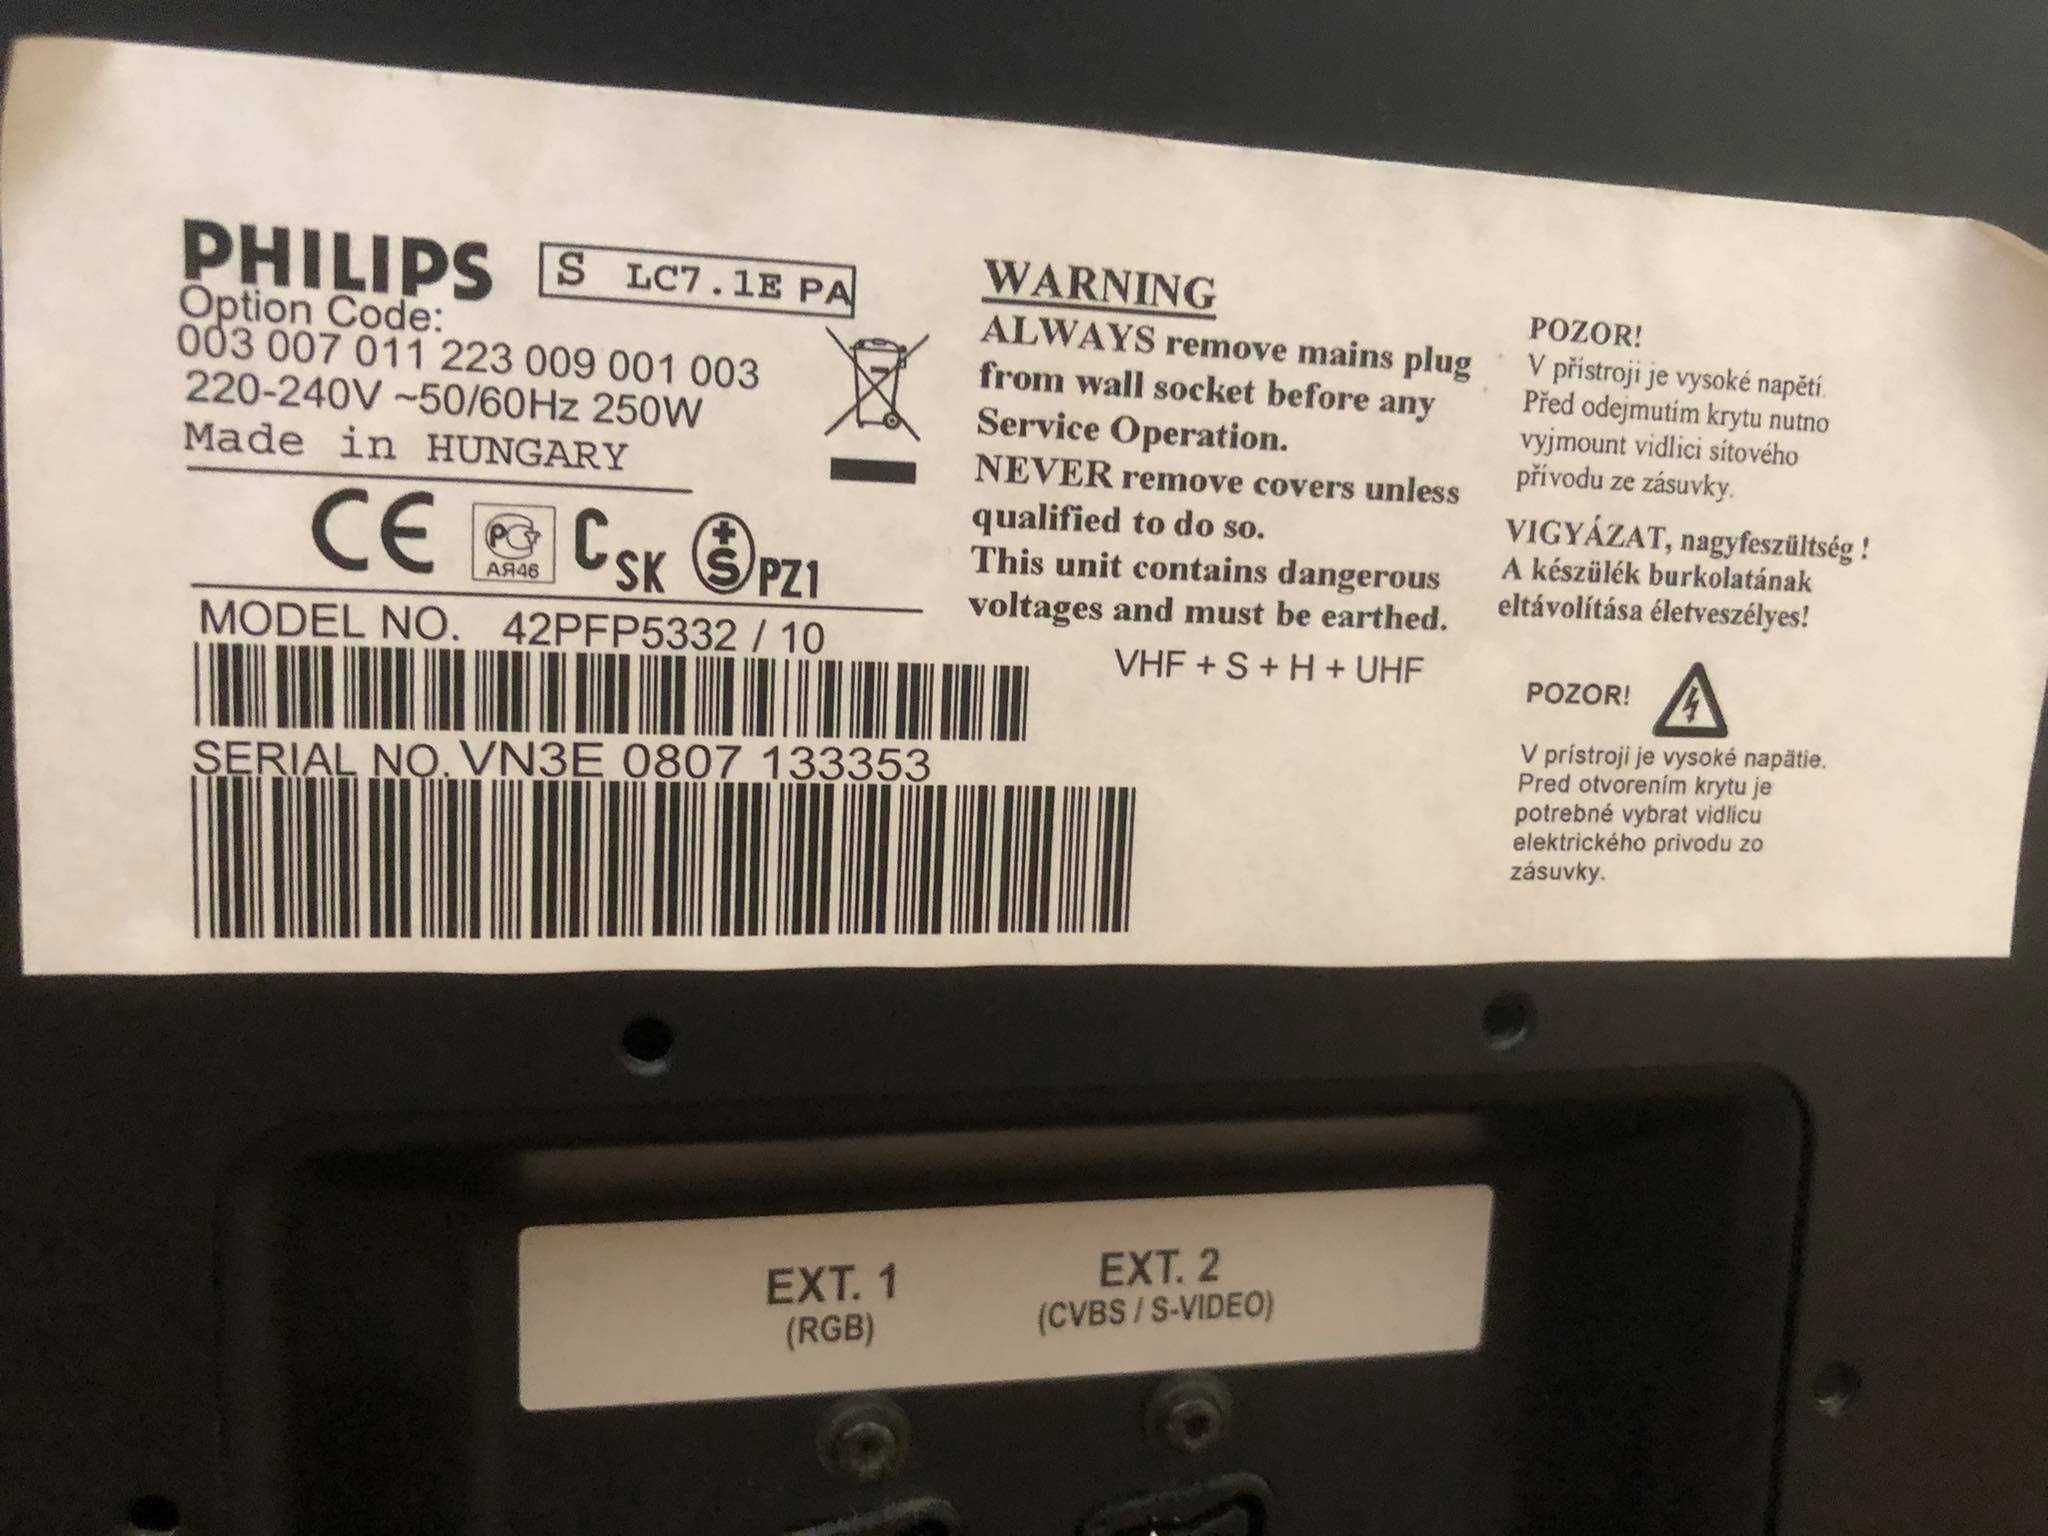 Telewizor plazmowy Philips 42PFP5332/10